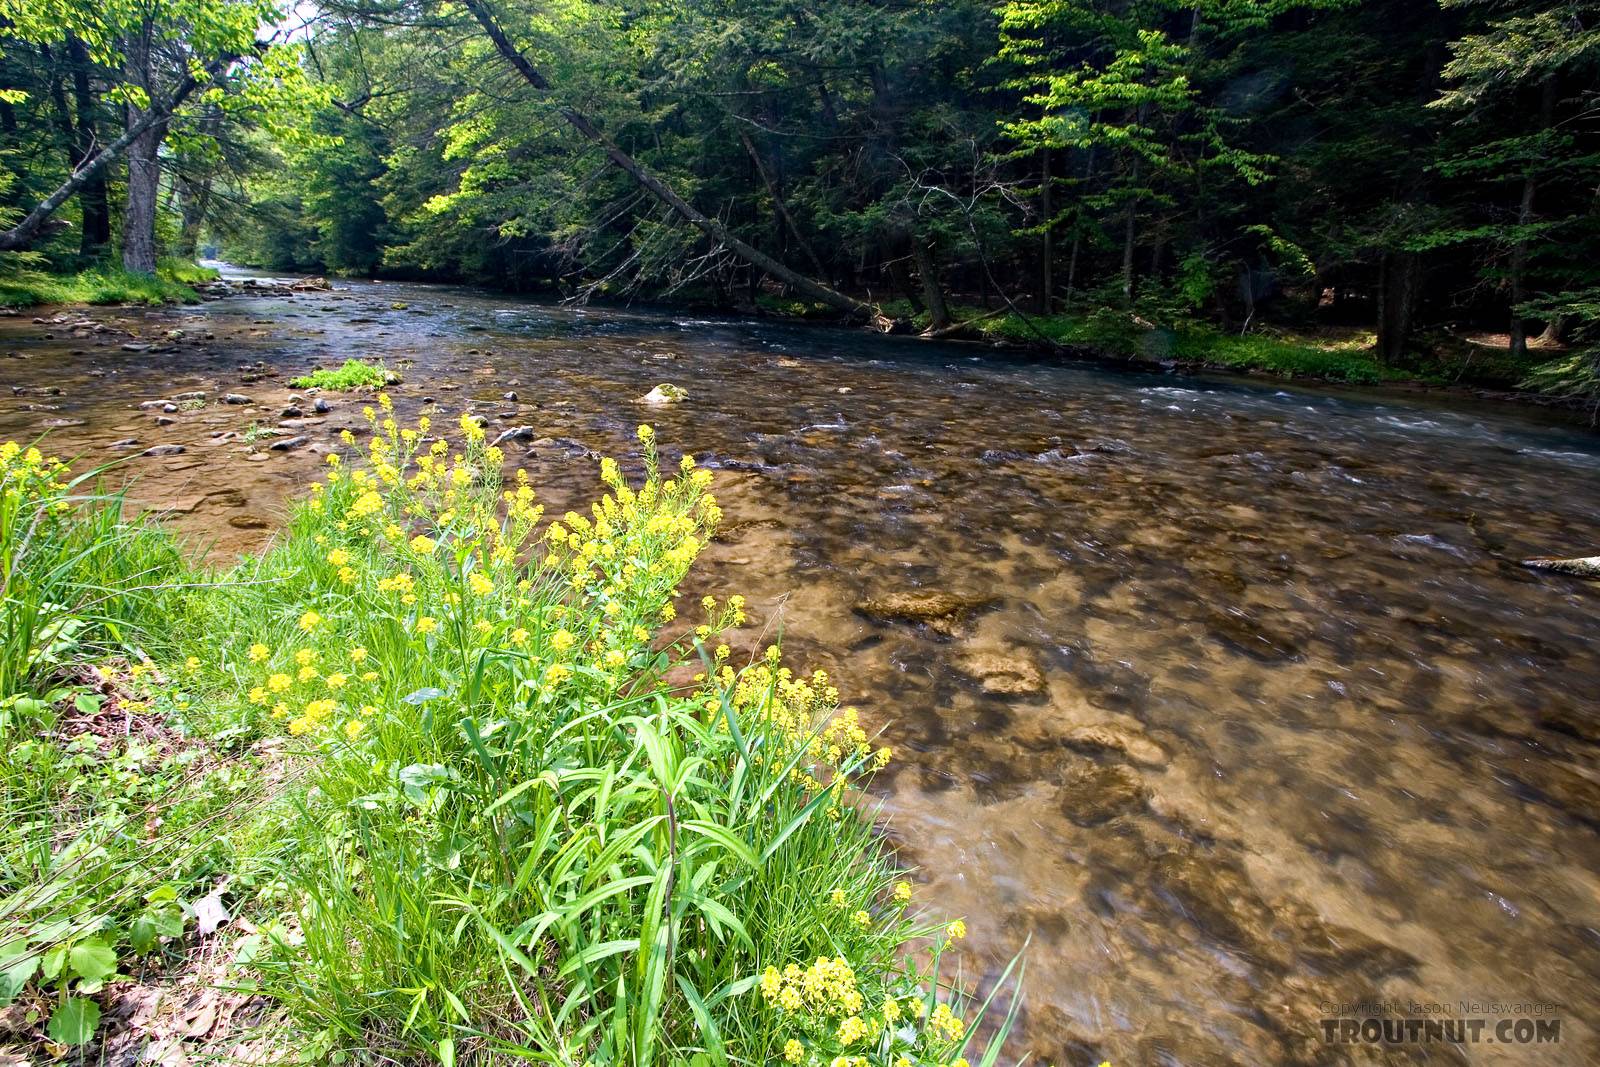  From Fishing Creek in Pennsylvania.